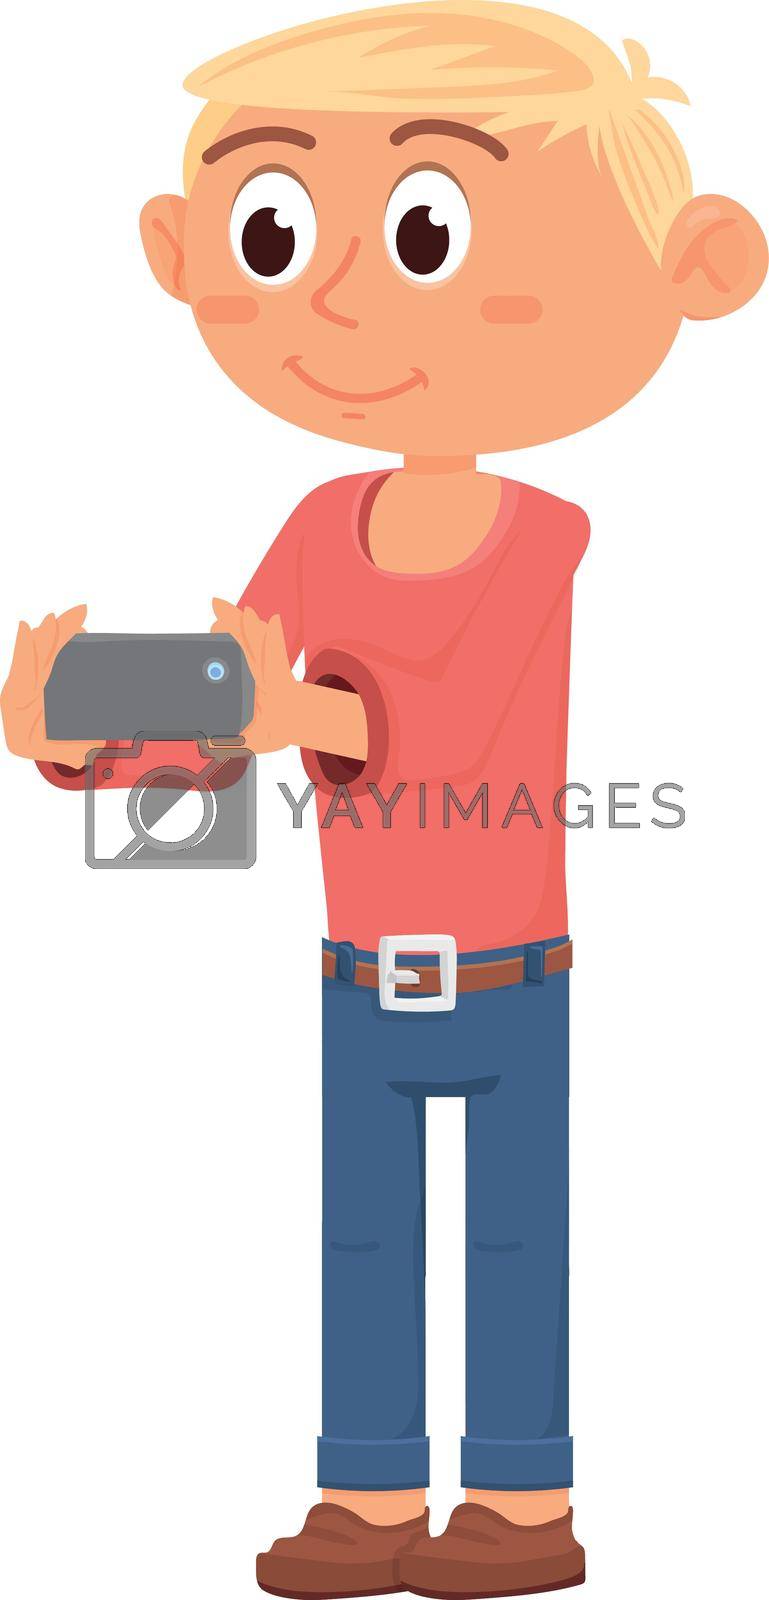 Royalty free image of Cute cartoon boy making photo with smartphone by LadadikArt